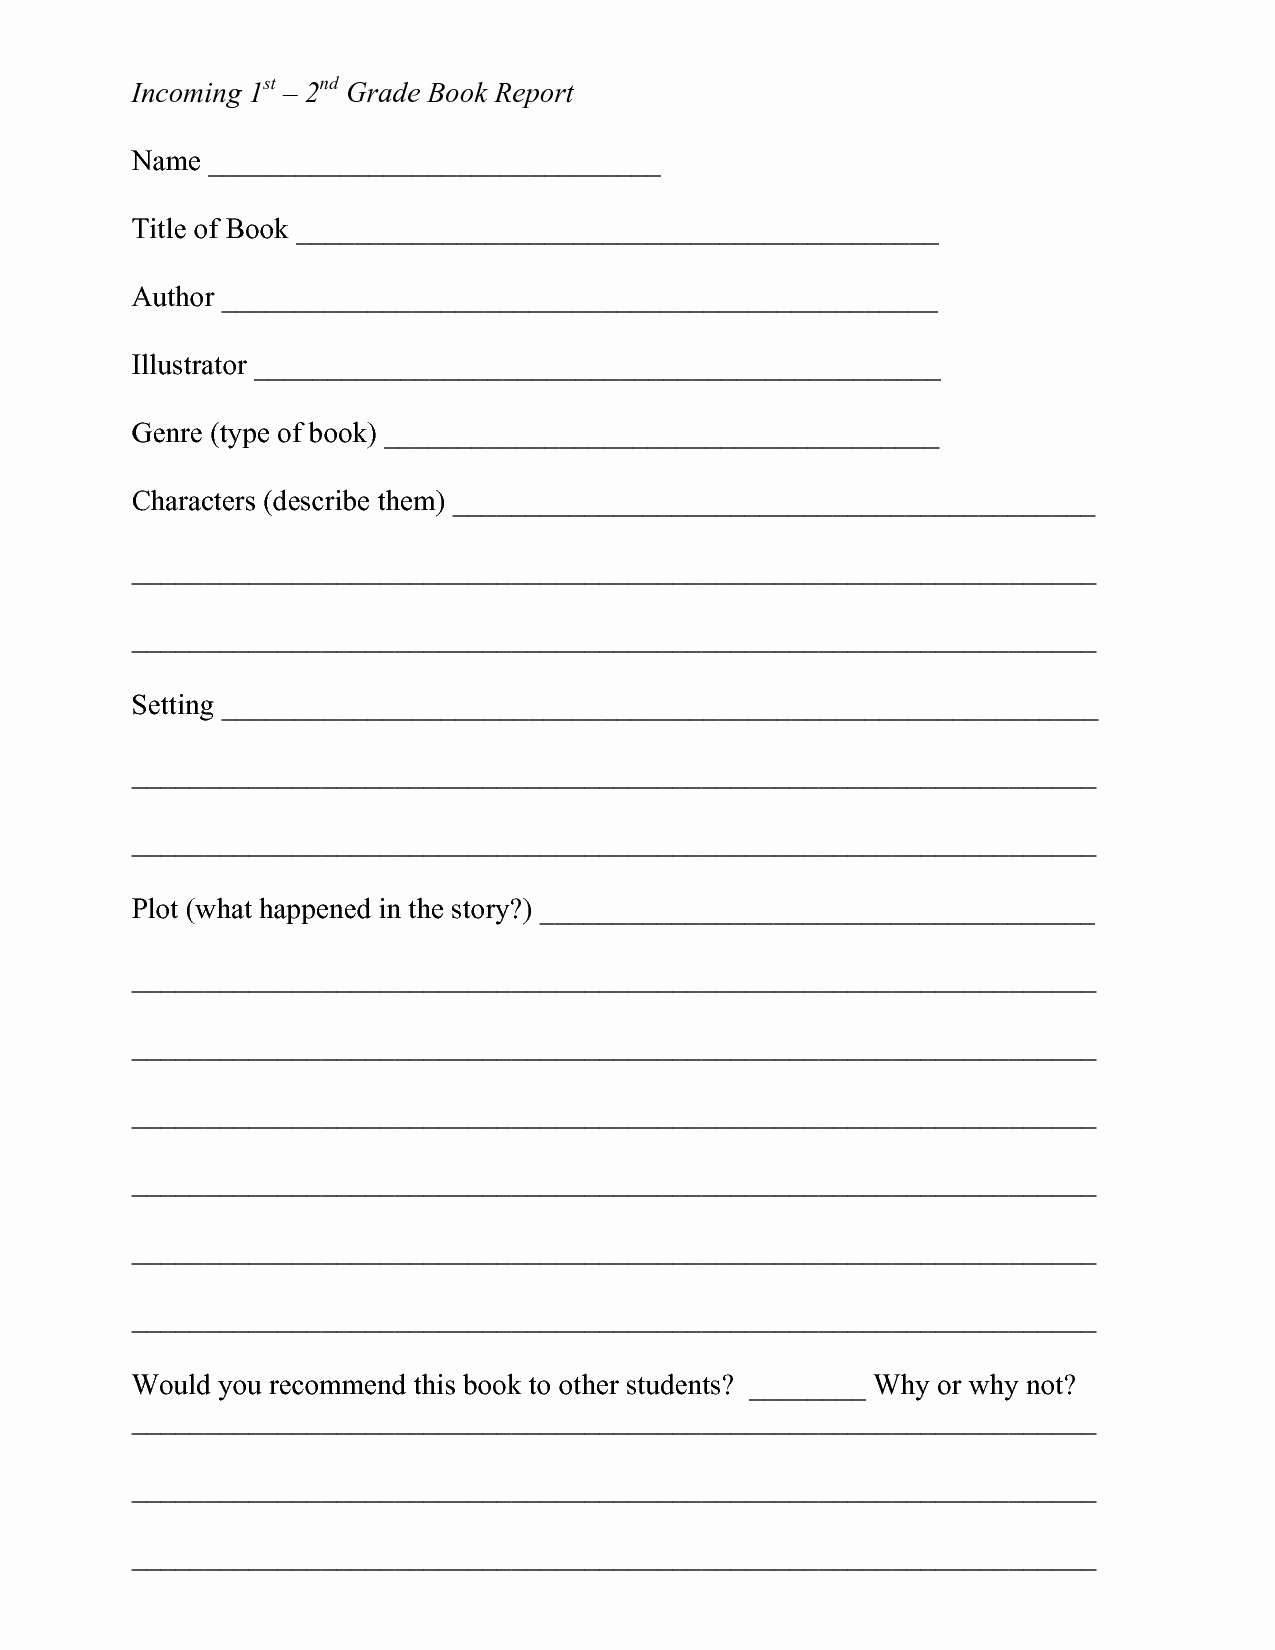 4th Grade Biography Book Report Outline Book Report Help